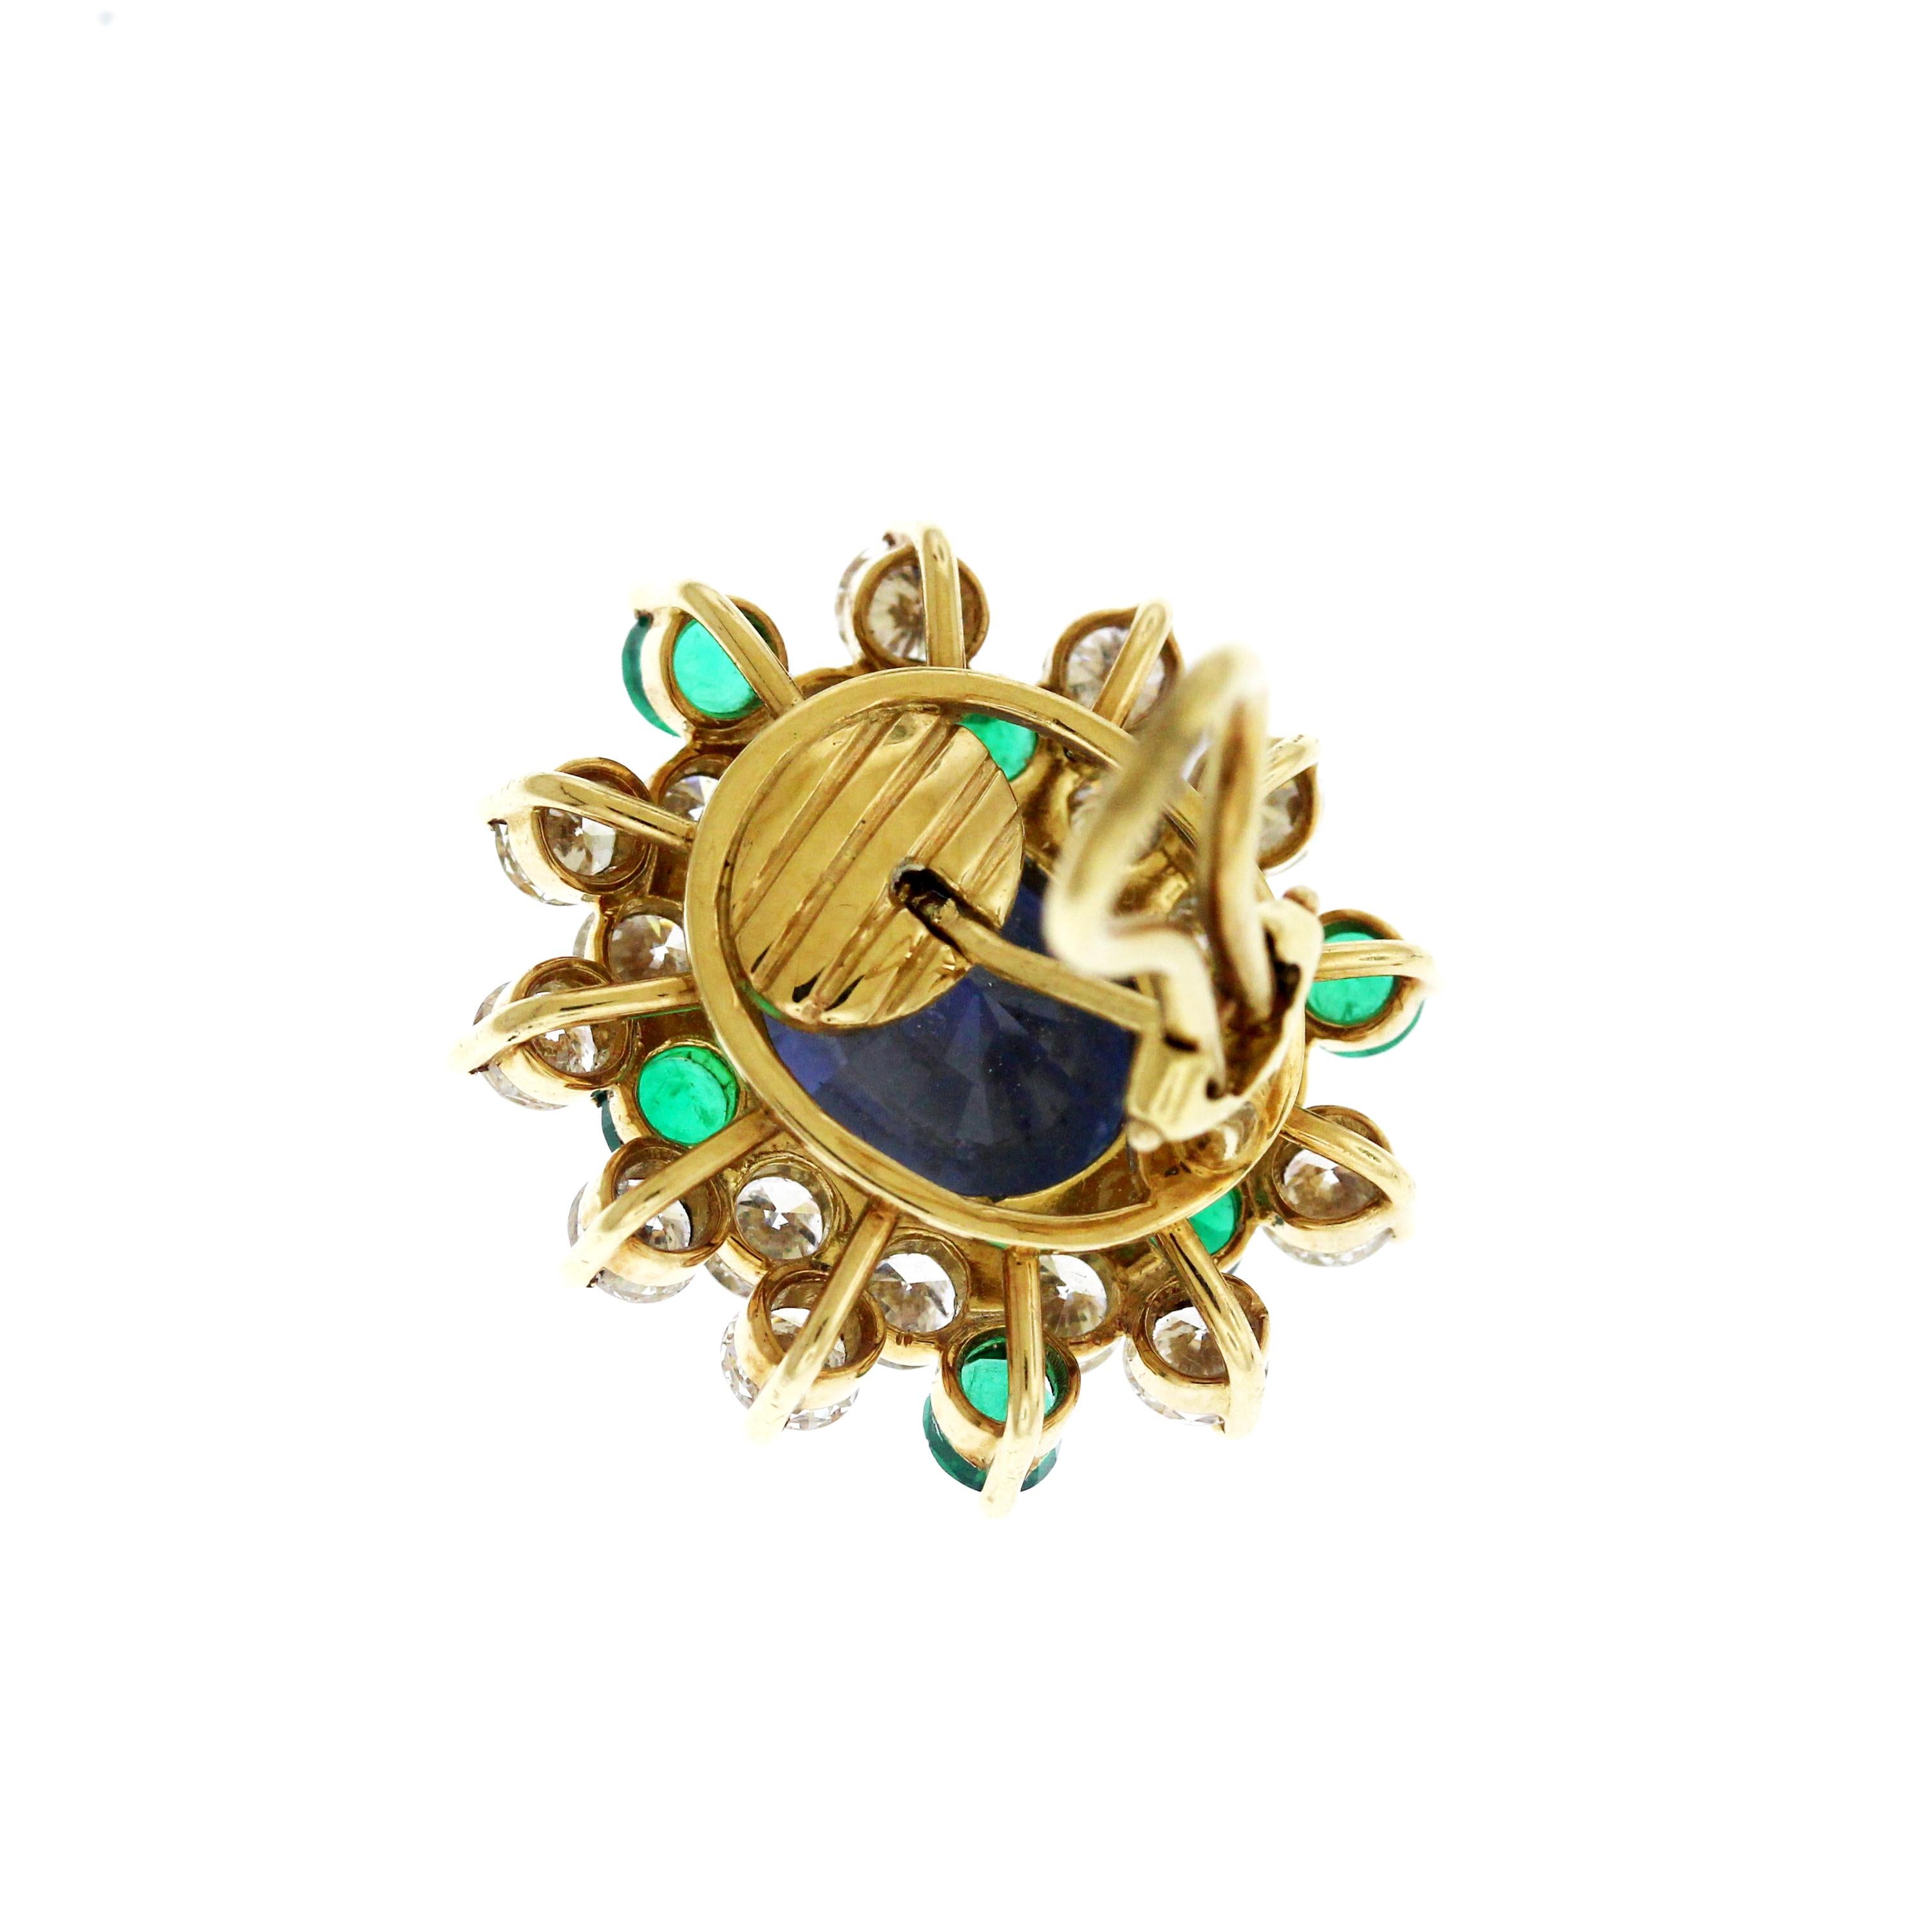 Oval Ceylon Blue Round Green Sapphires Diamond 18K Yellow Gold Stud Earrings

12 carat approximate blue and green sapphires, total weight. Blue sapphire origin is Ceylon (Sri Lanka)

7.10 carat G color, VS clarity round cut white diamonds. Each